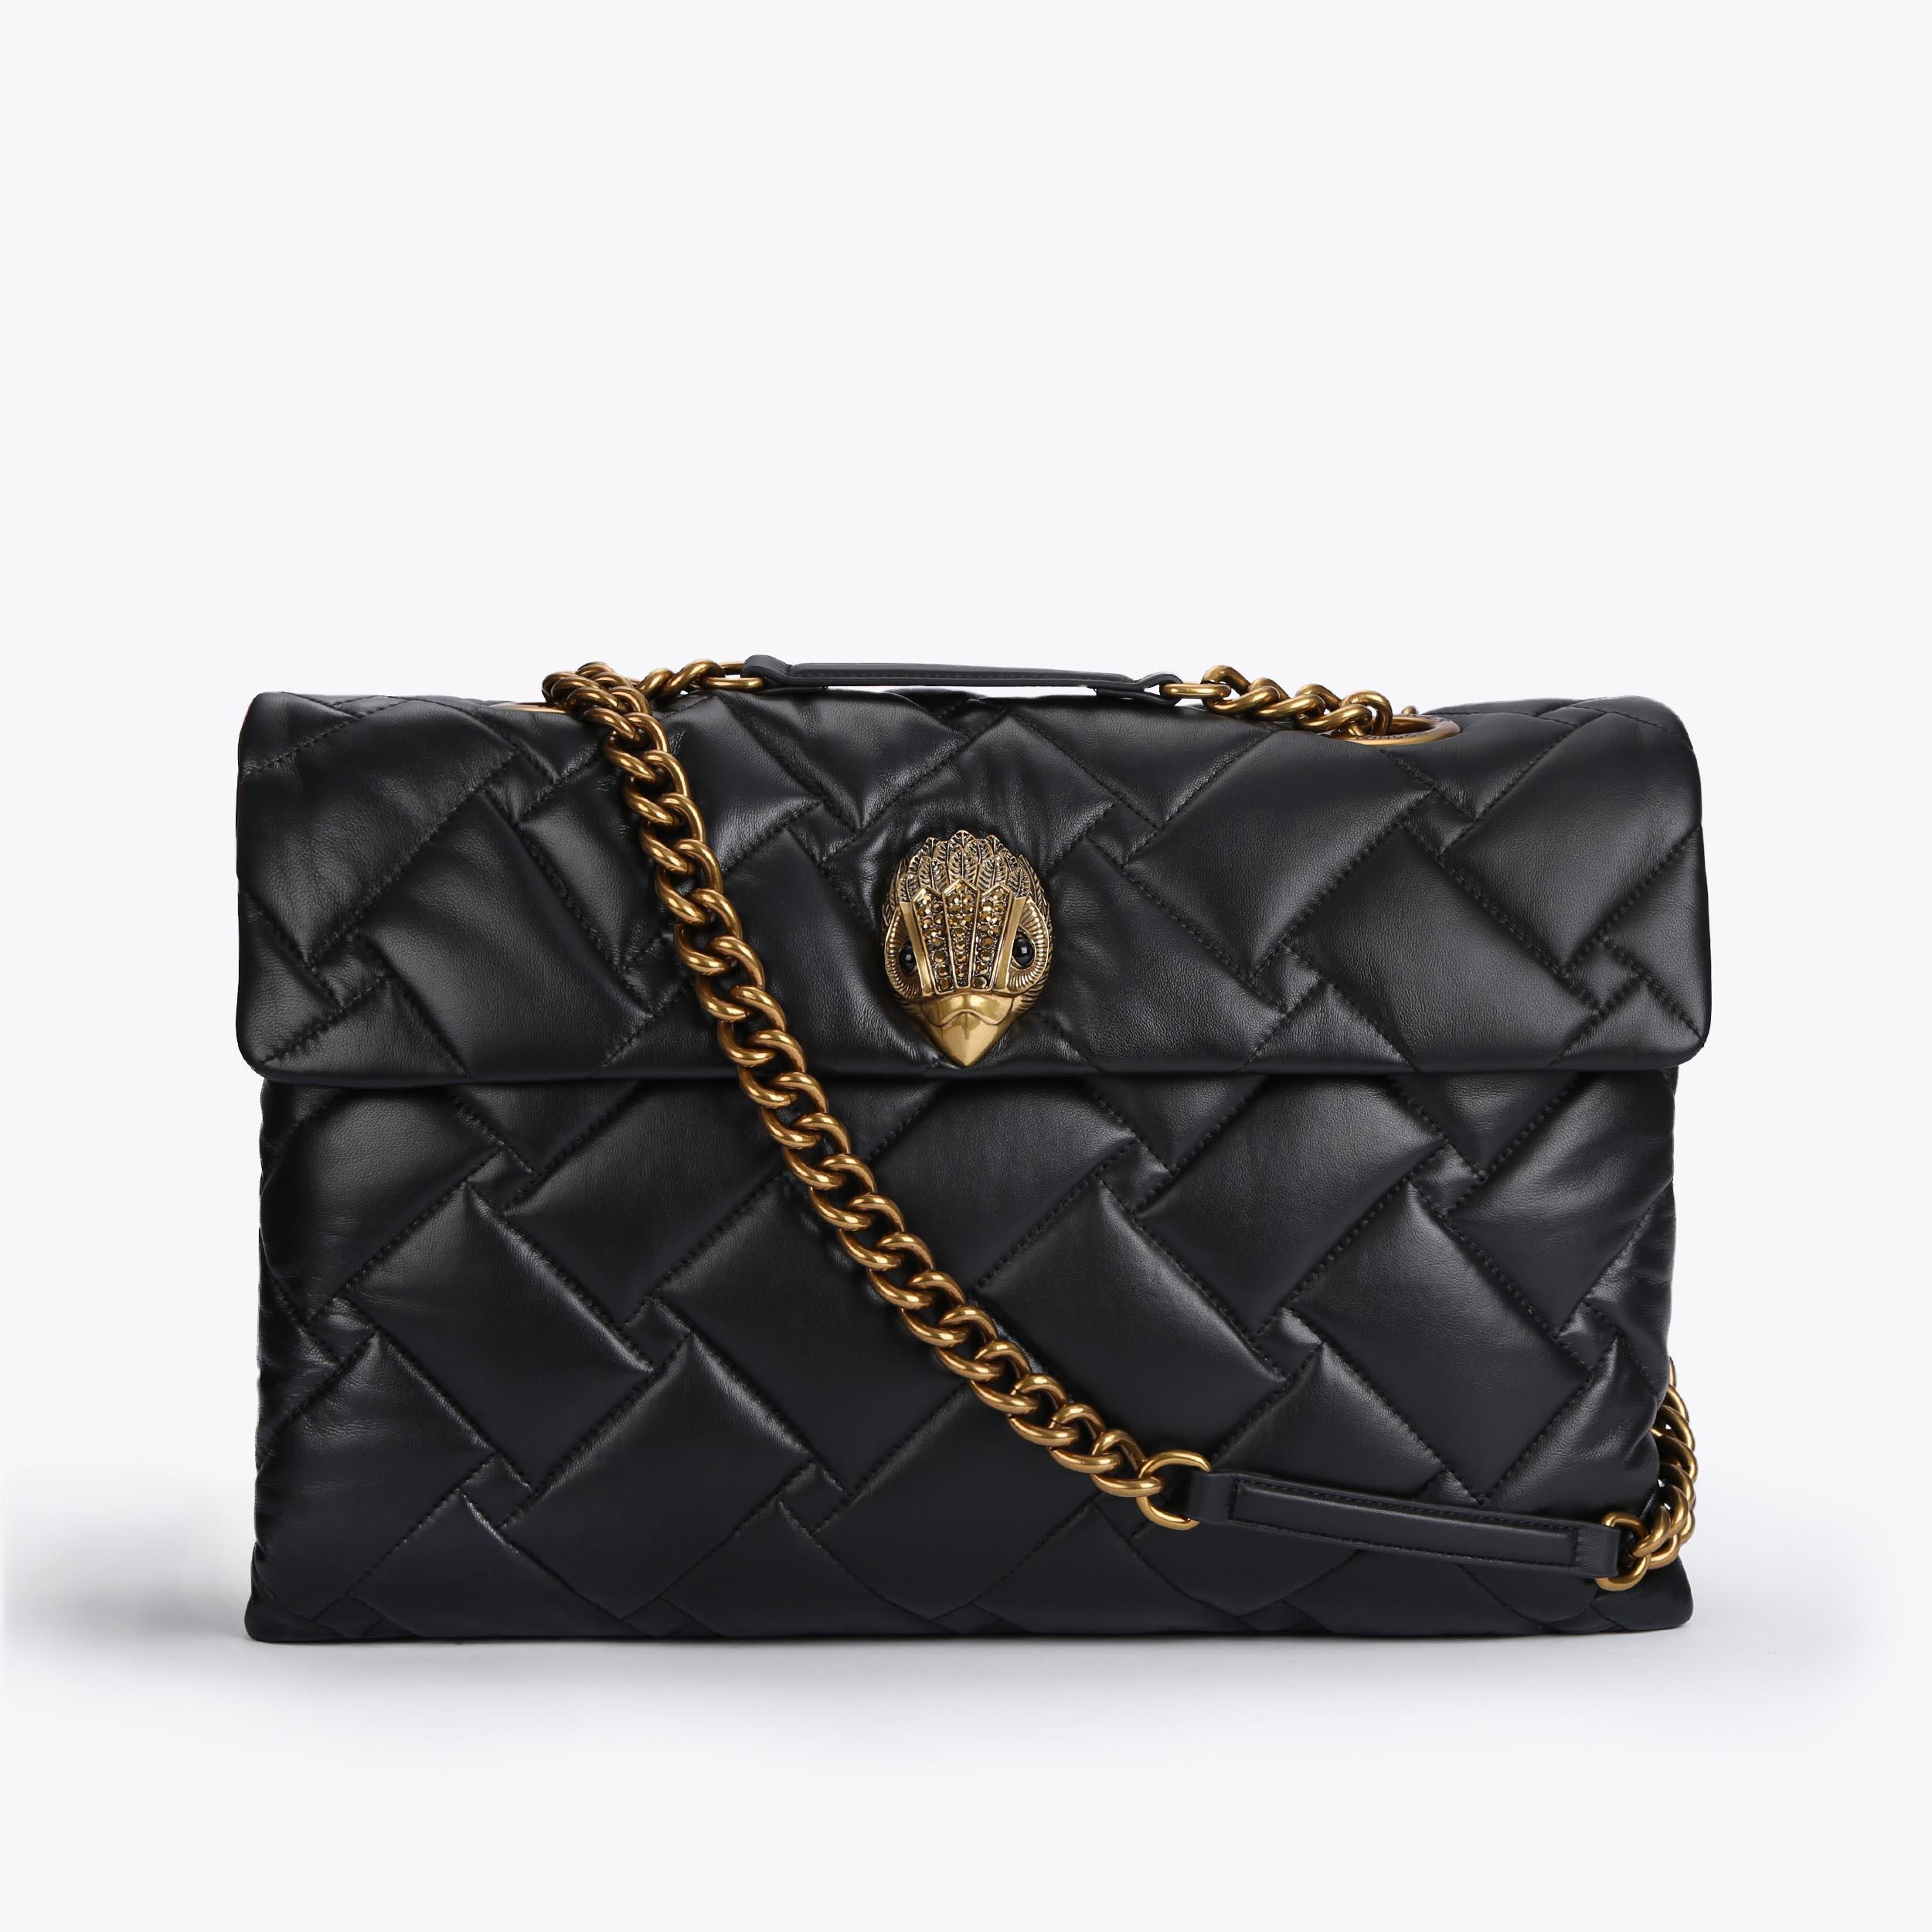 MACRO KENSINGTON SOFT BAG Black Quilted Leather Oversized Bag by KURT ...